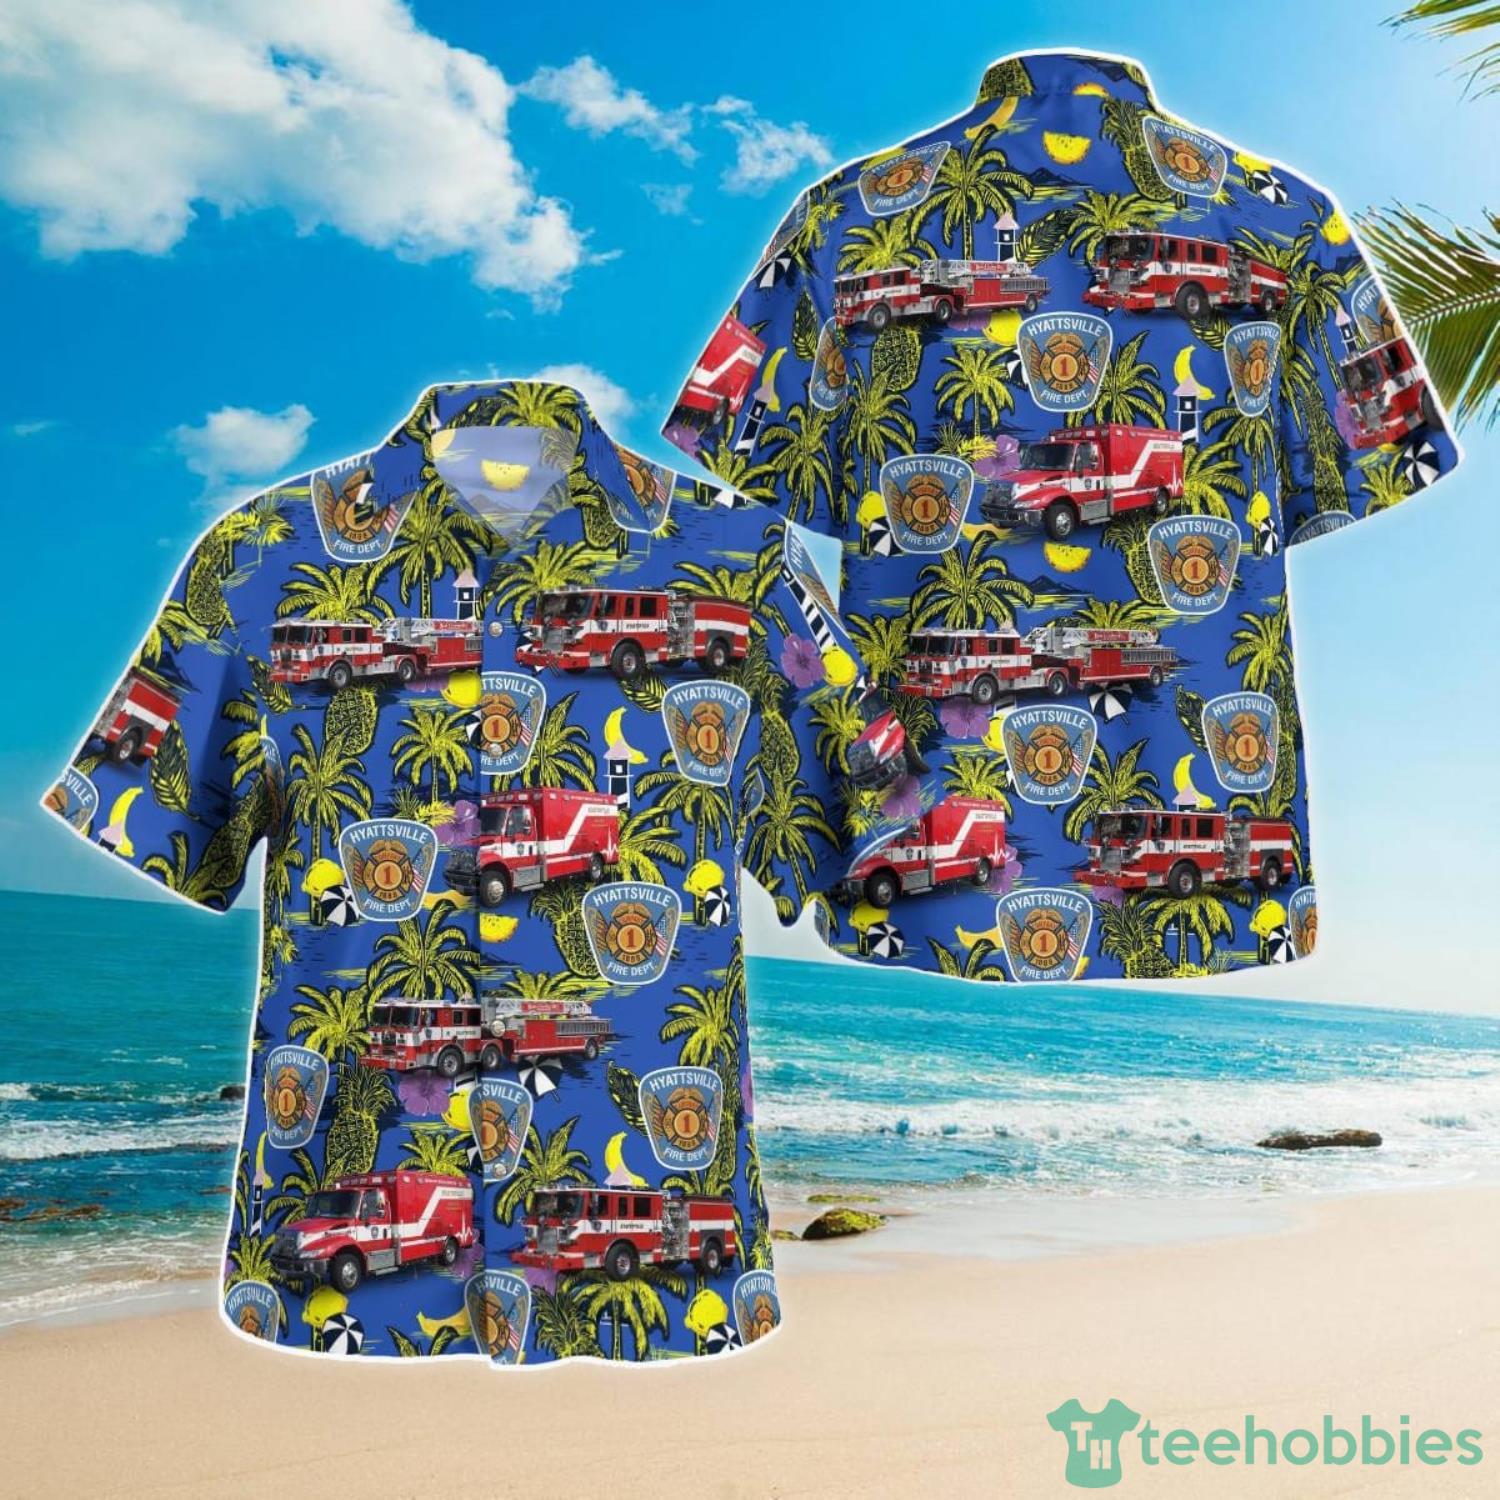 Tampa Bay Lightning NHL Flower Hawaiian Shirt Best Gift For Fans -  Freedomdesign